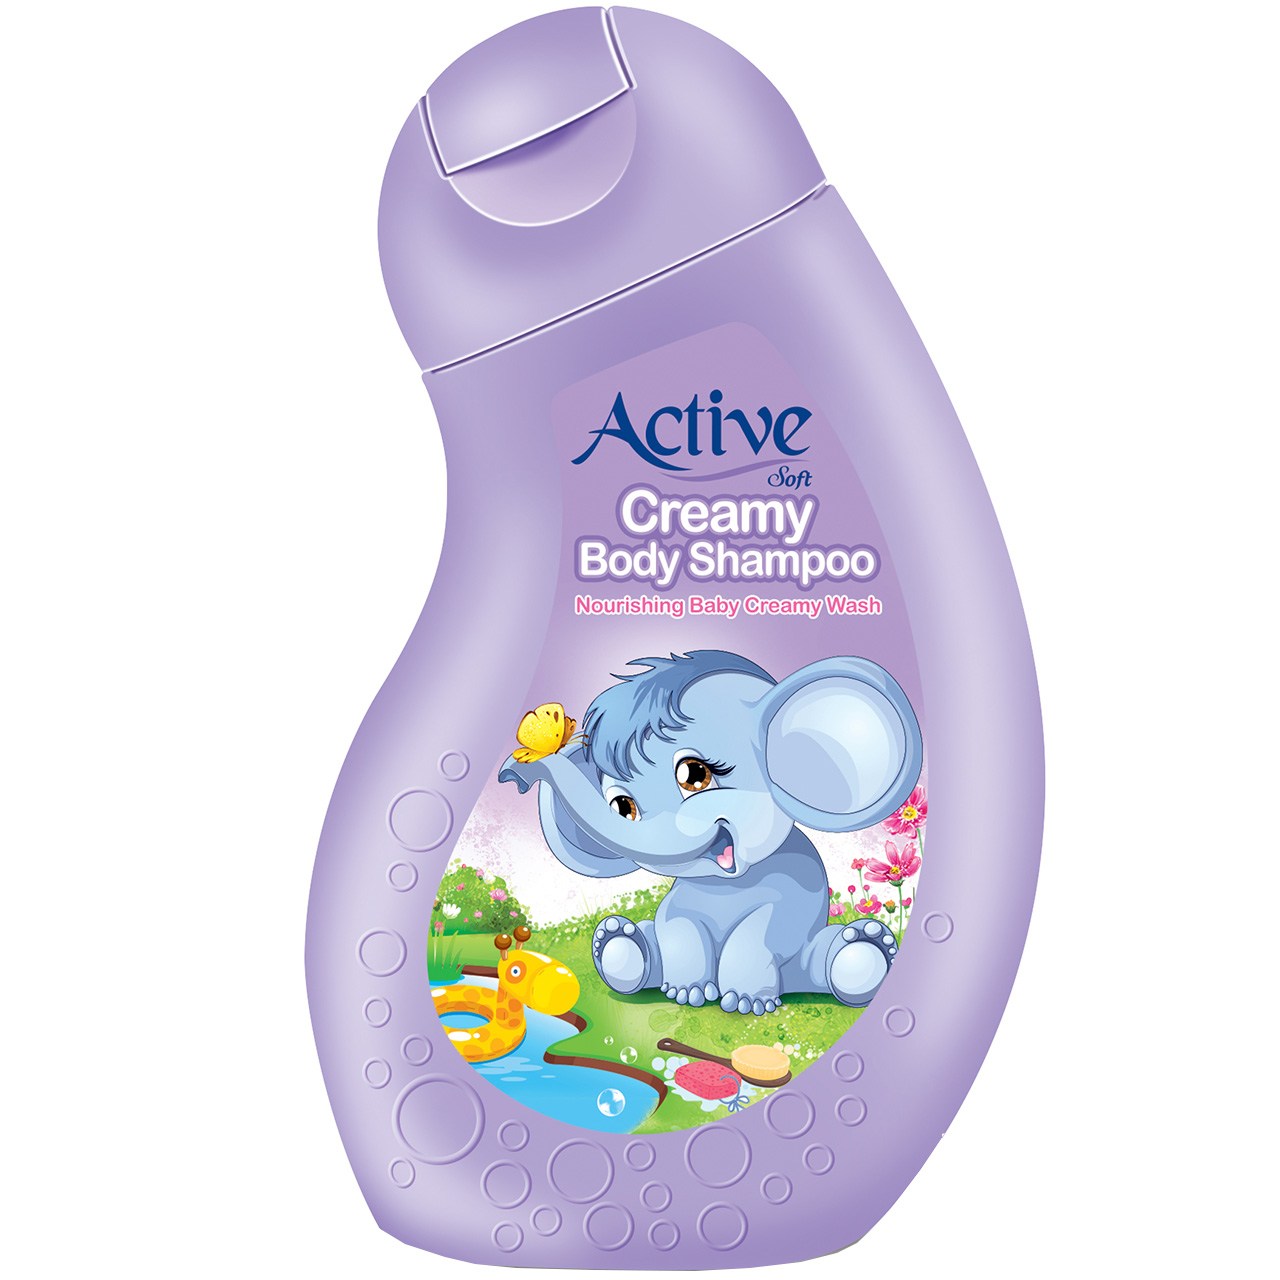 Active Purple Creamy Body Shampoo For Kids 250g